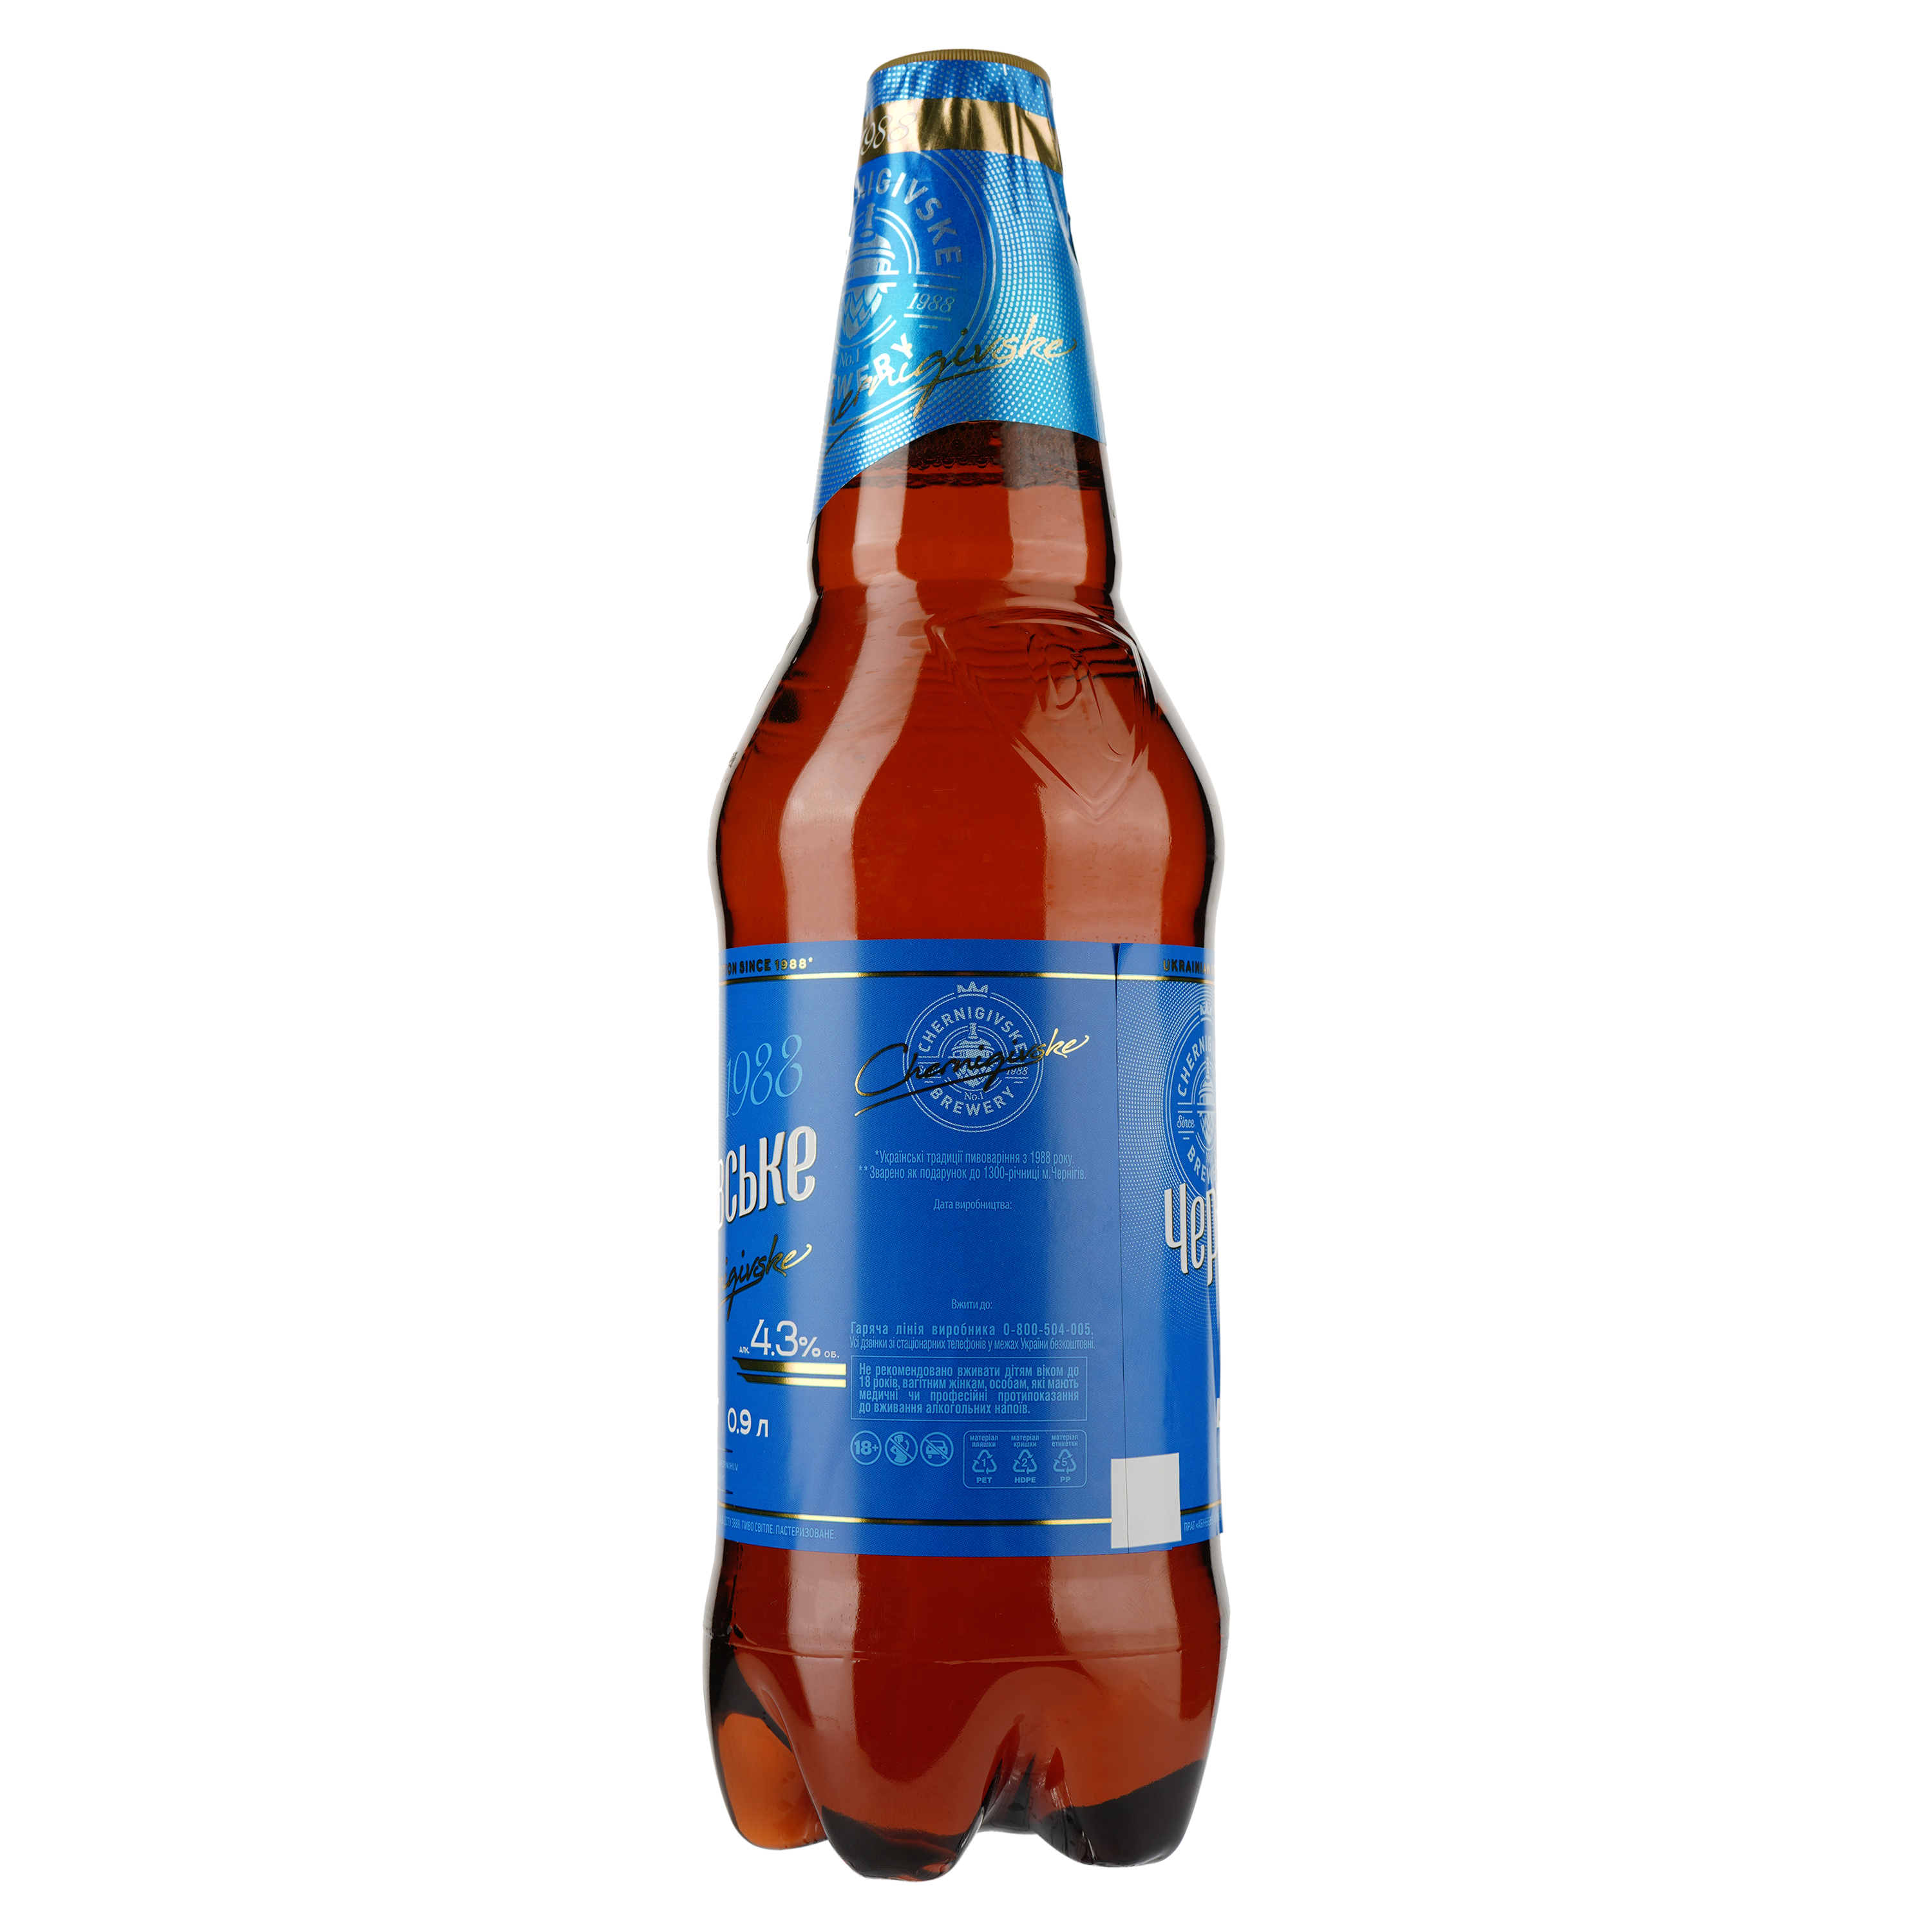 Пиво Чернігівське Light, светлое, 4,3%, 0,9 л - фото 3